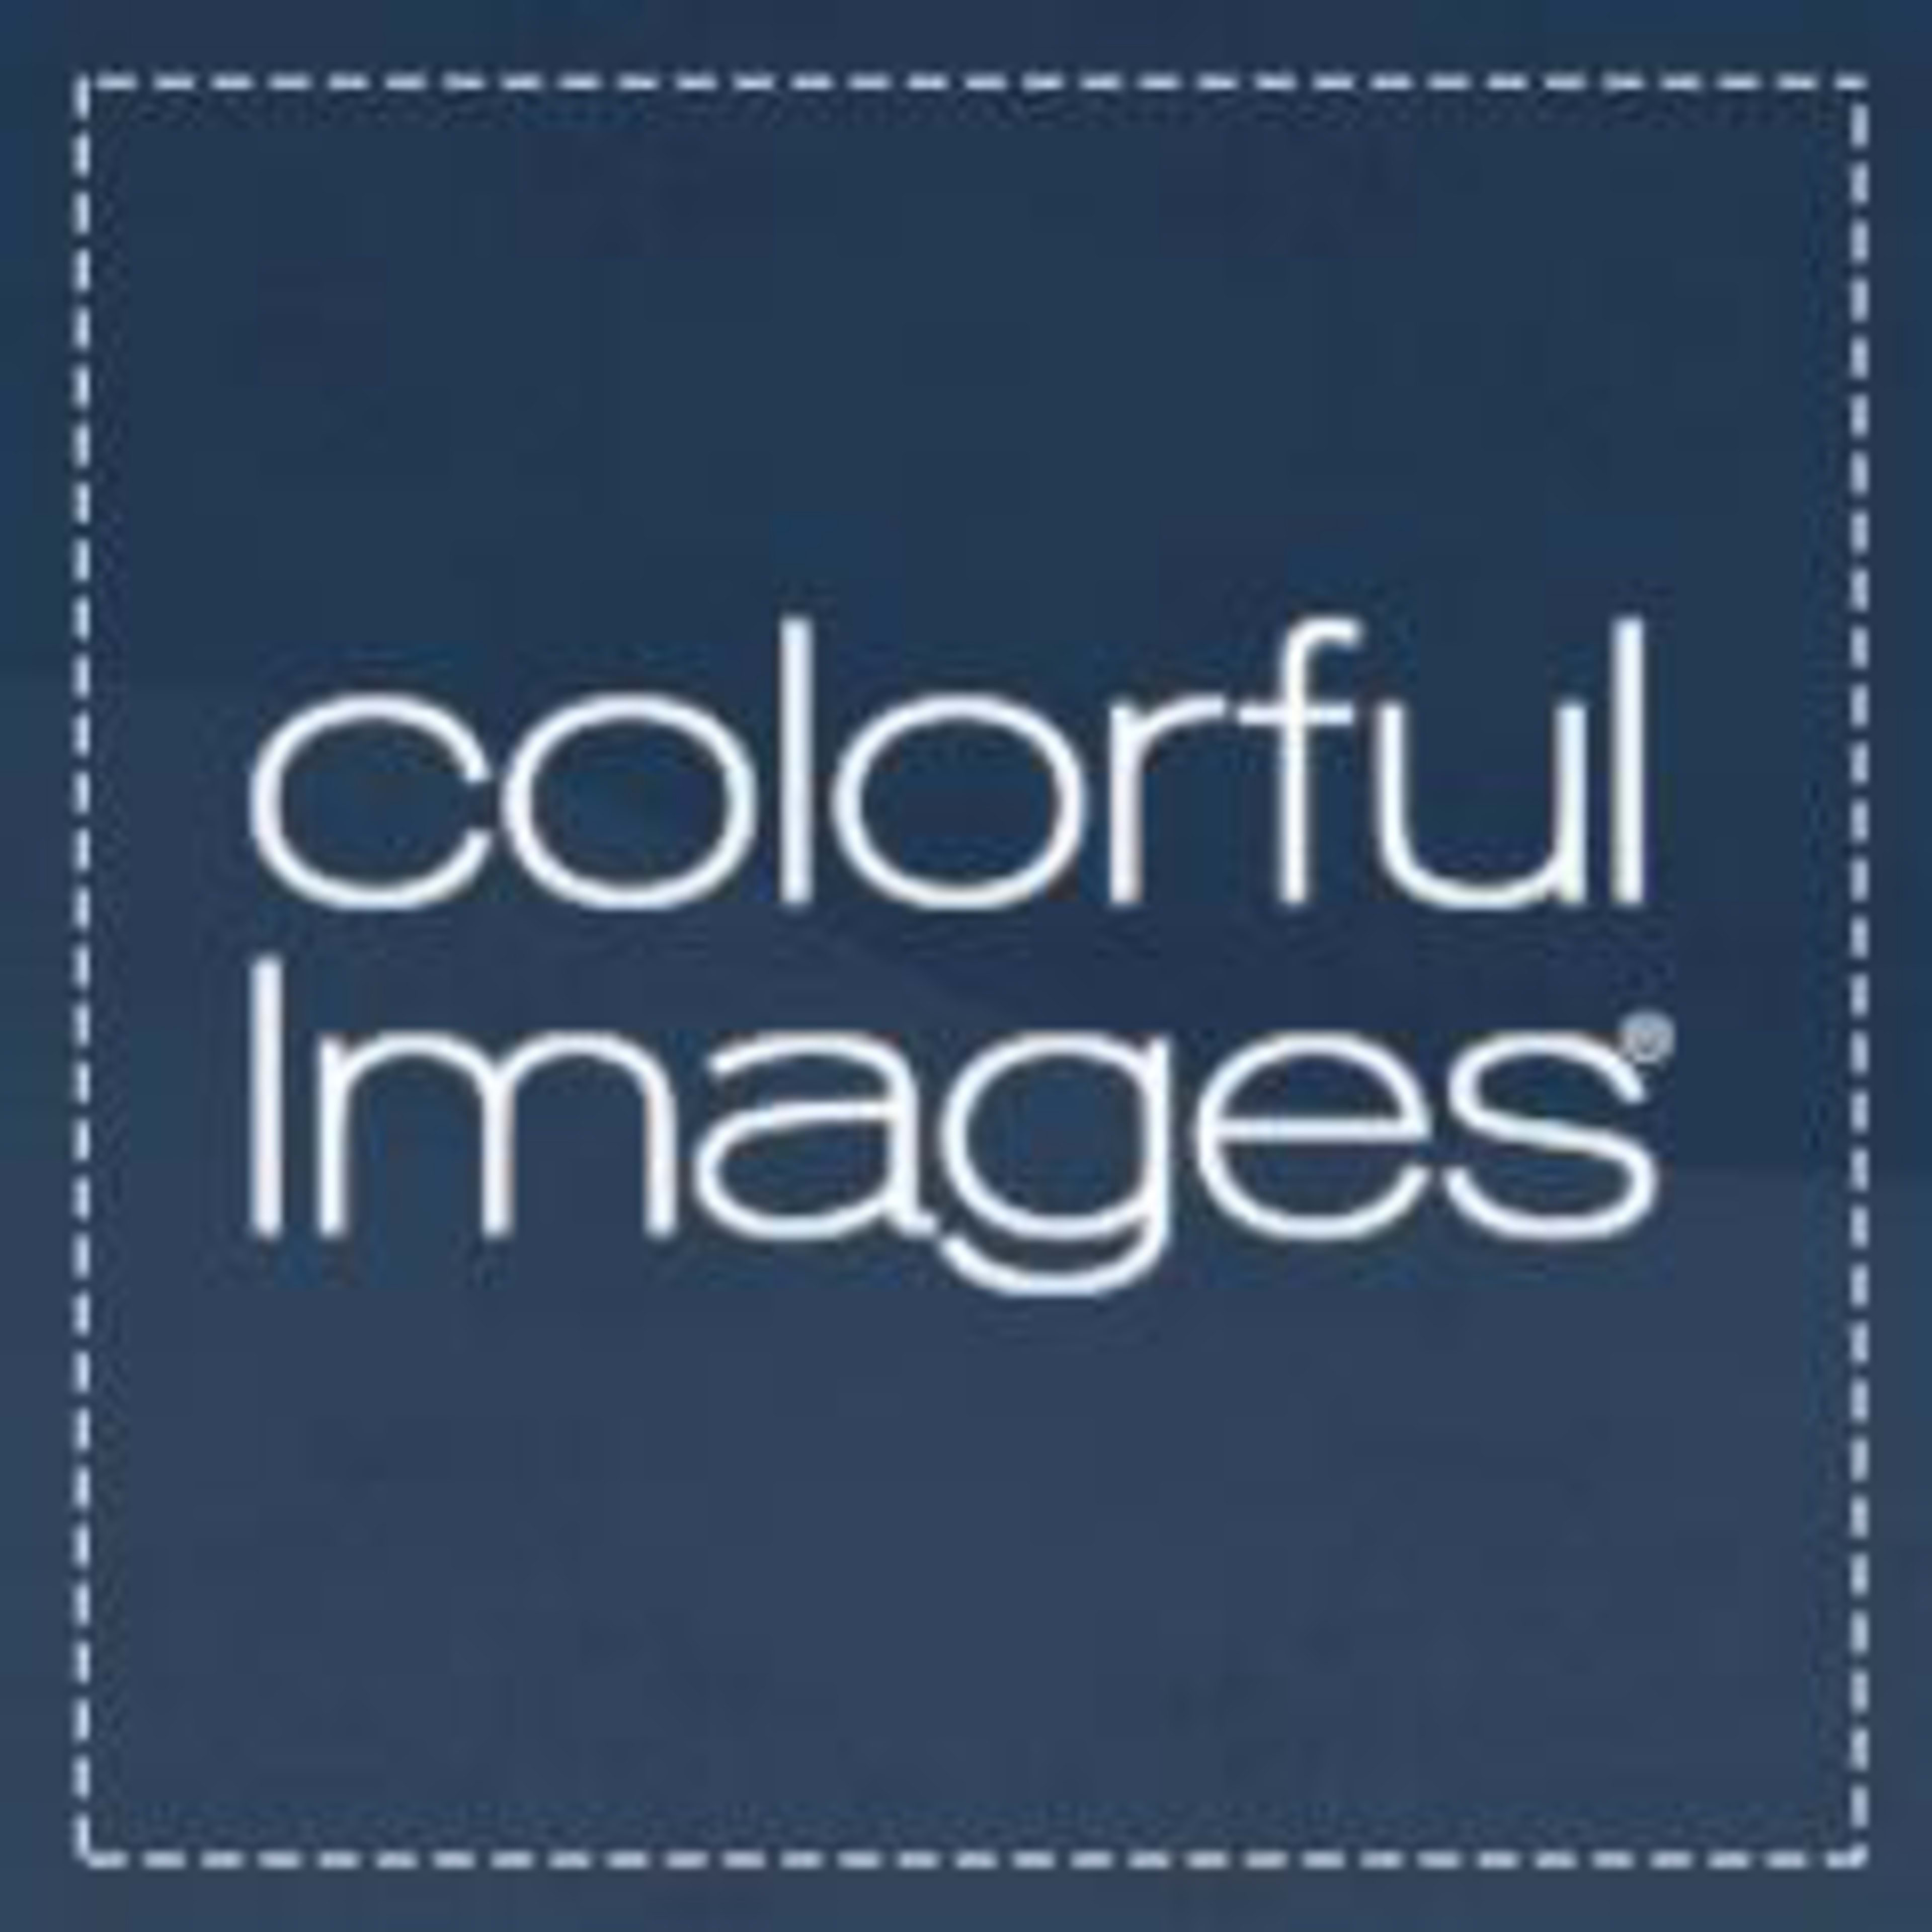 Colorful Images.com